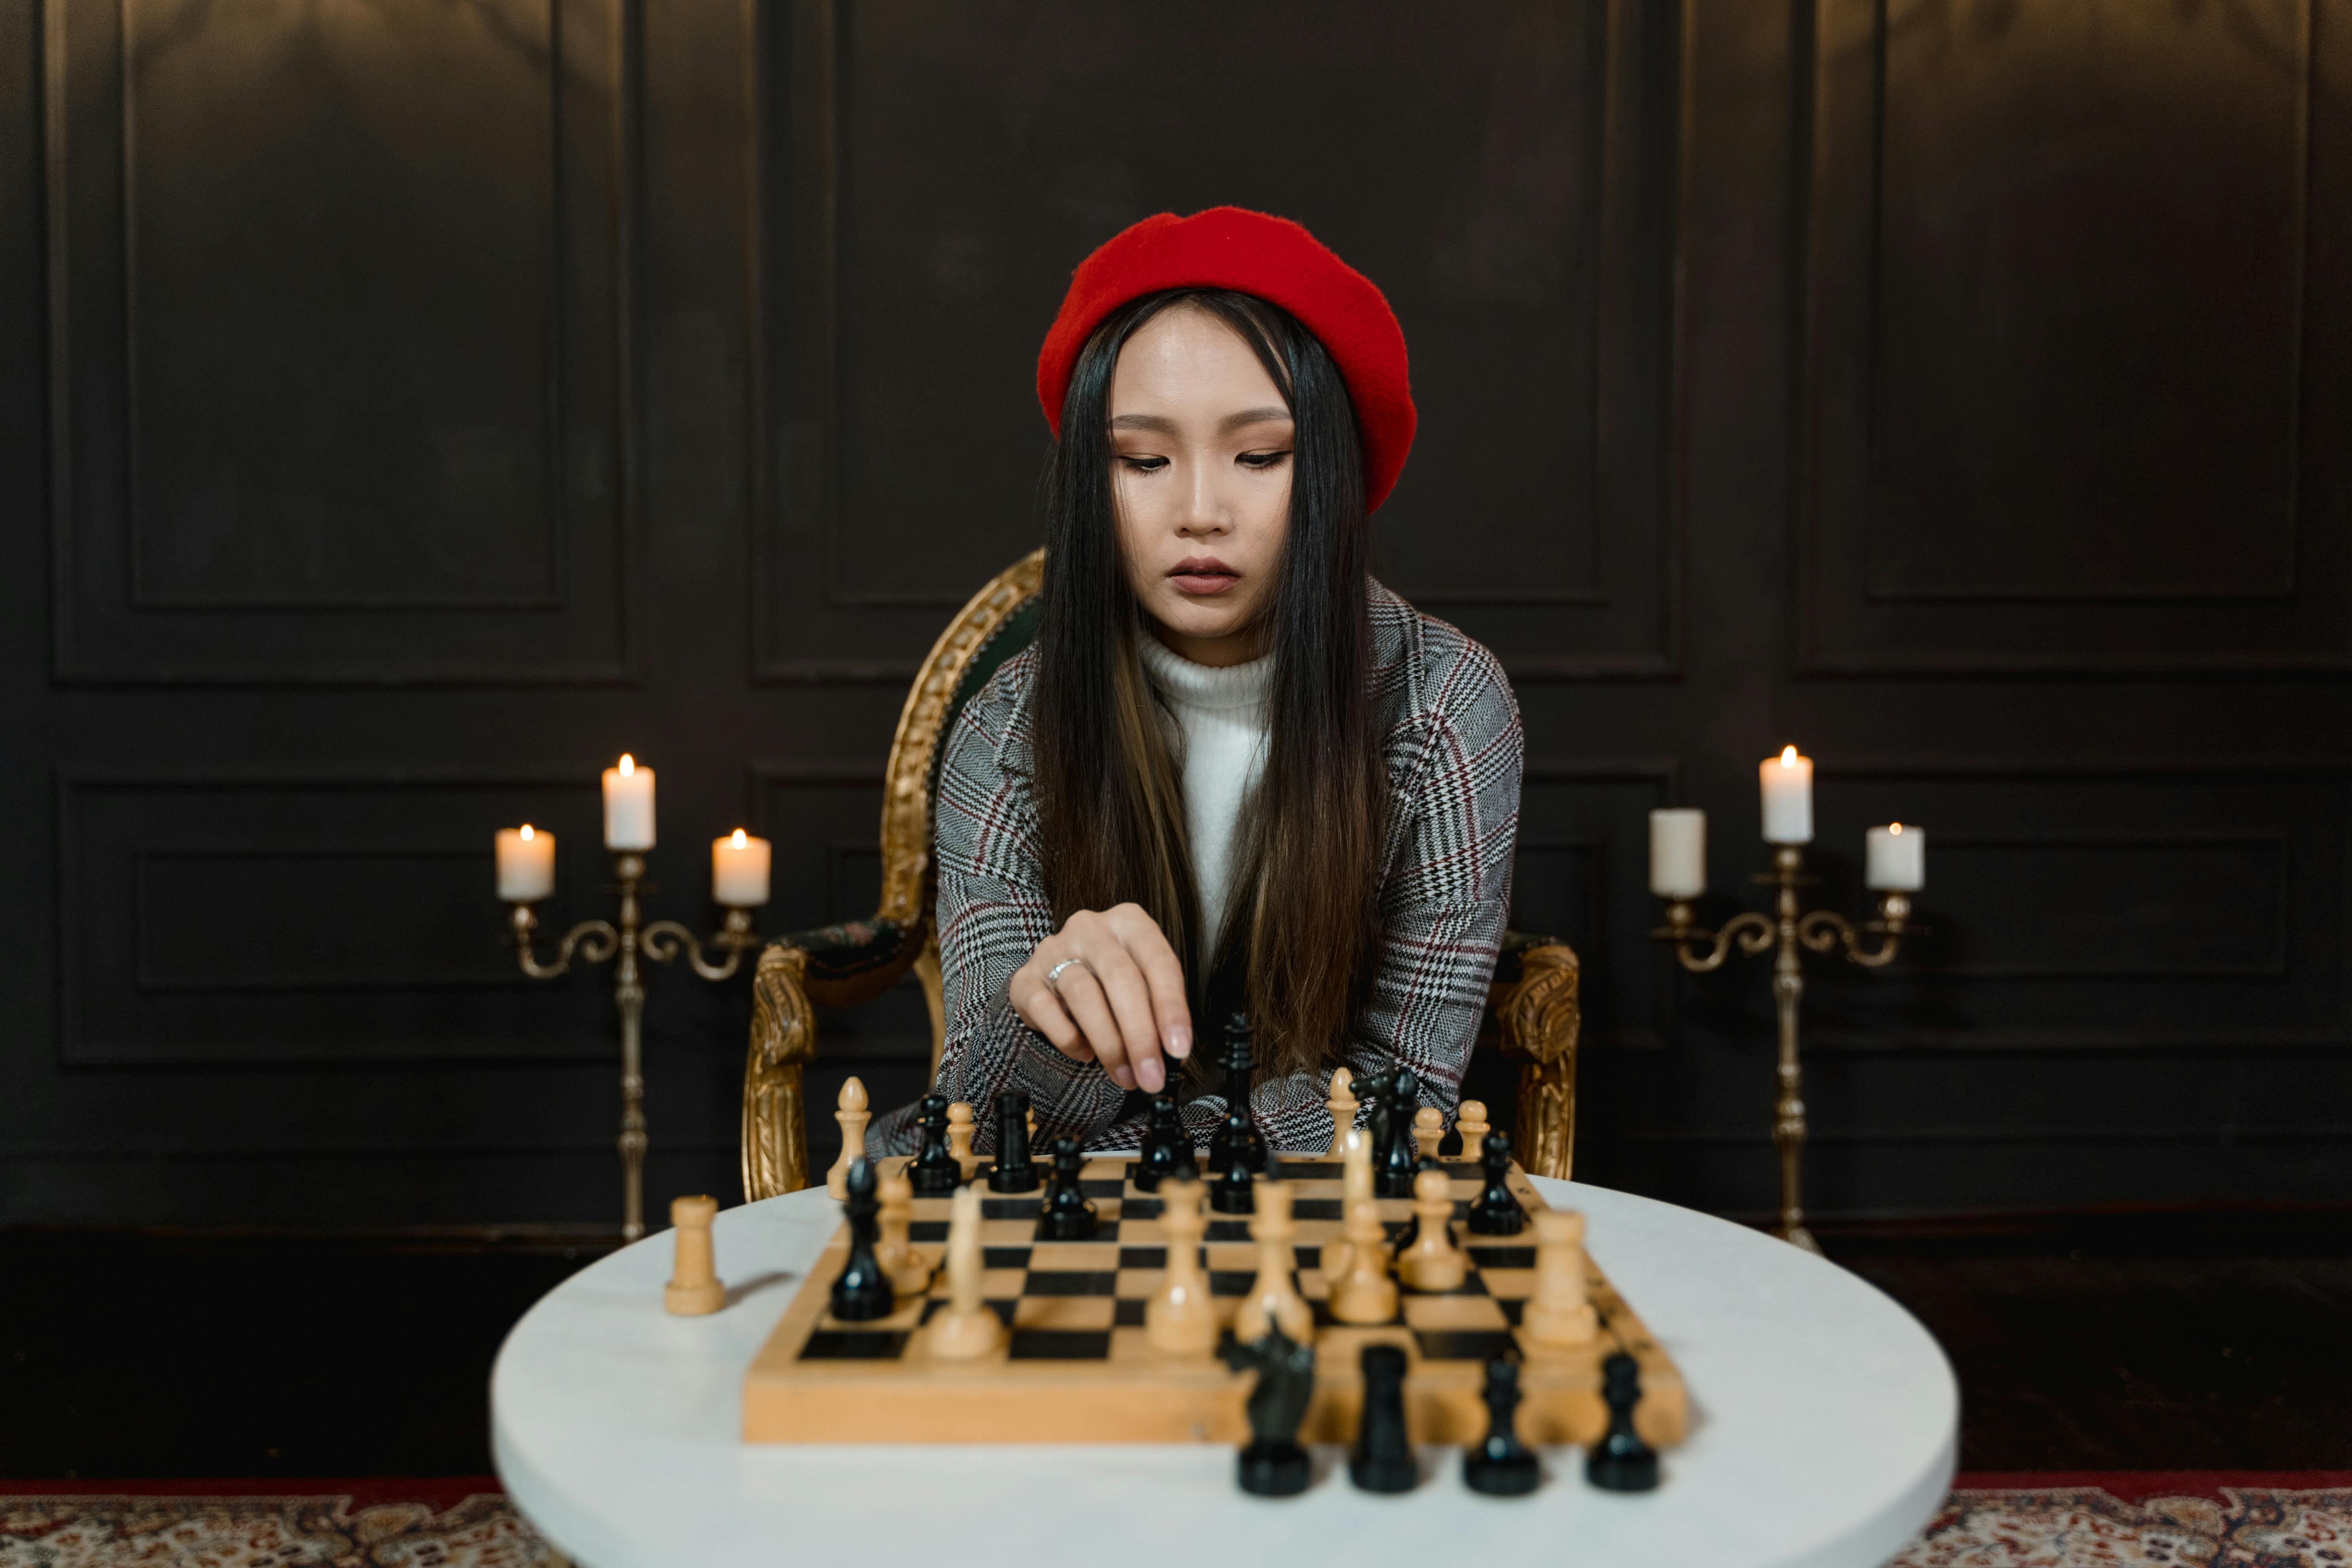 a woman playing chess